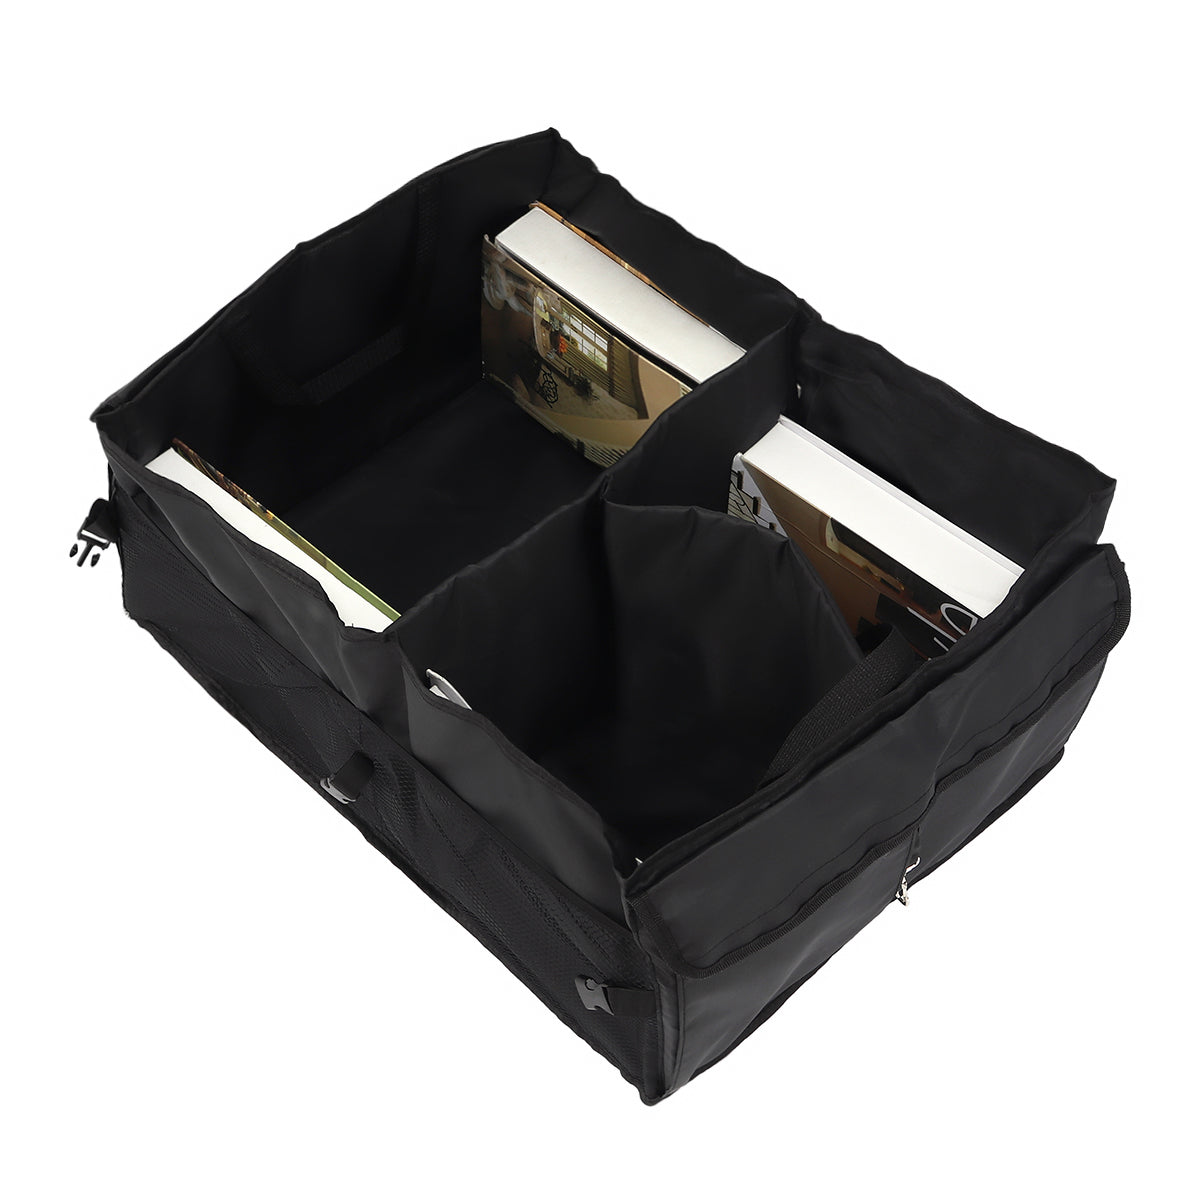 56cm x 41cm x 27cm Car Trunk Organizer Storage Box - Non Slip Strips to Prevent Sliding Secure Straps - Auto GoShop